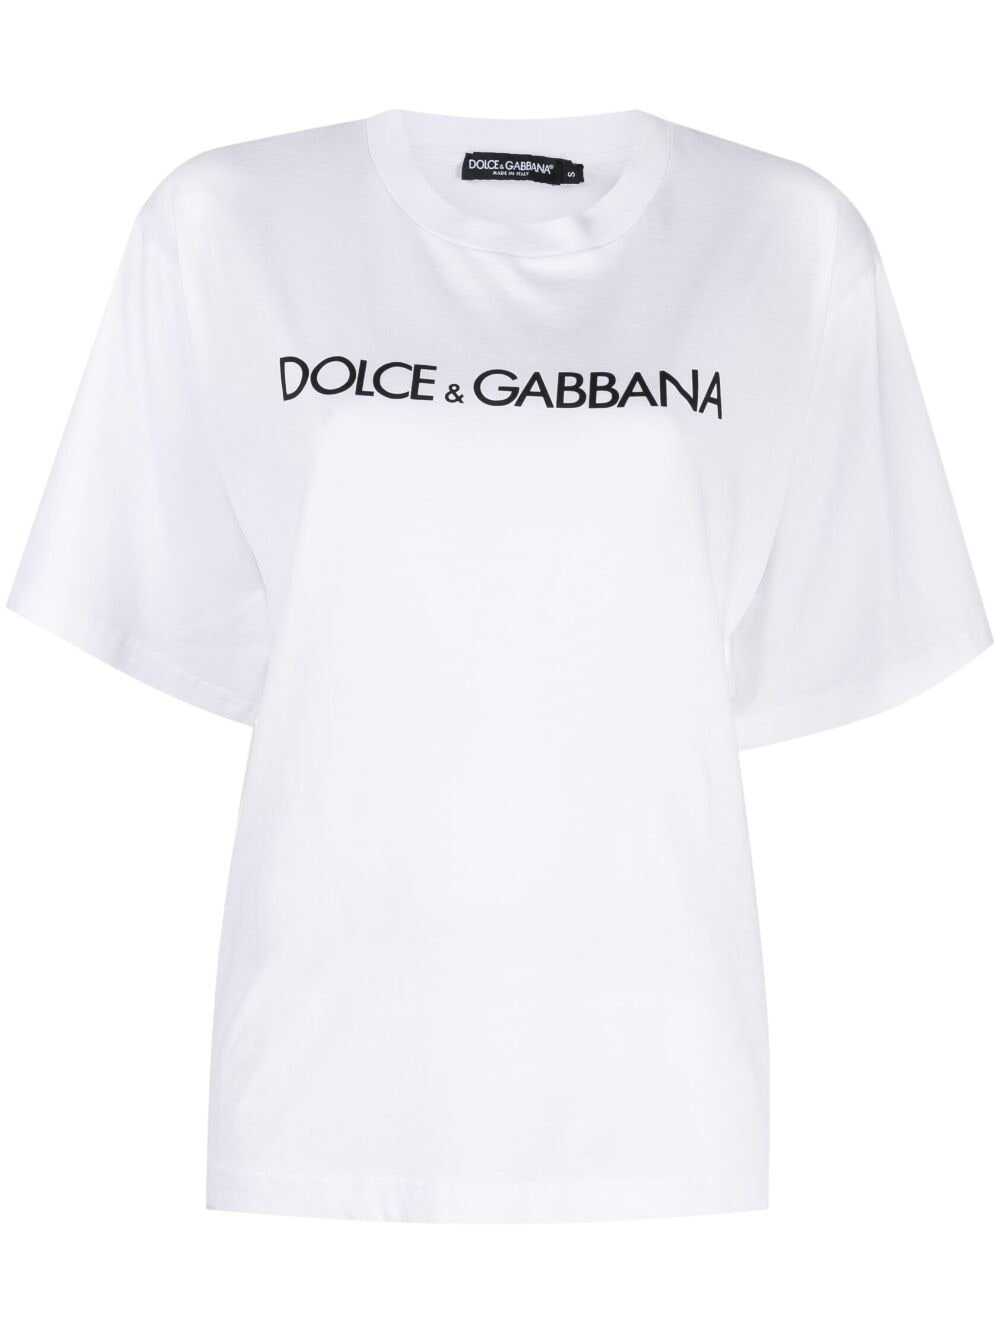 Poze Dolce & Gabbana Dolce & Gabbana T-shirts And Polos White White b-mall.ro 